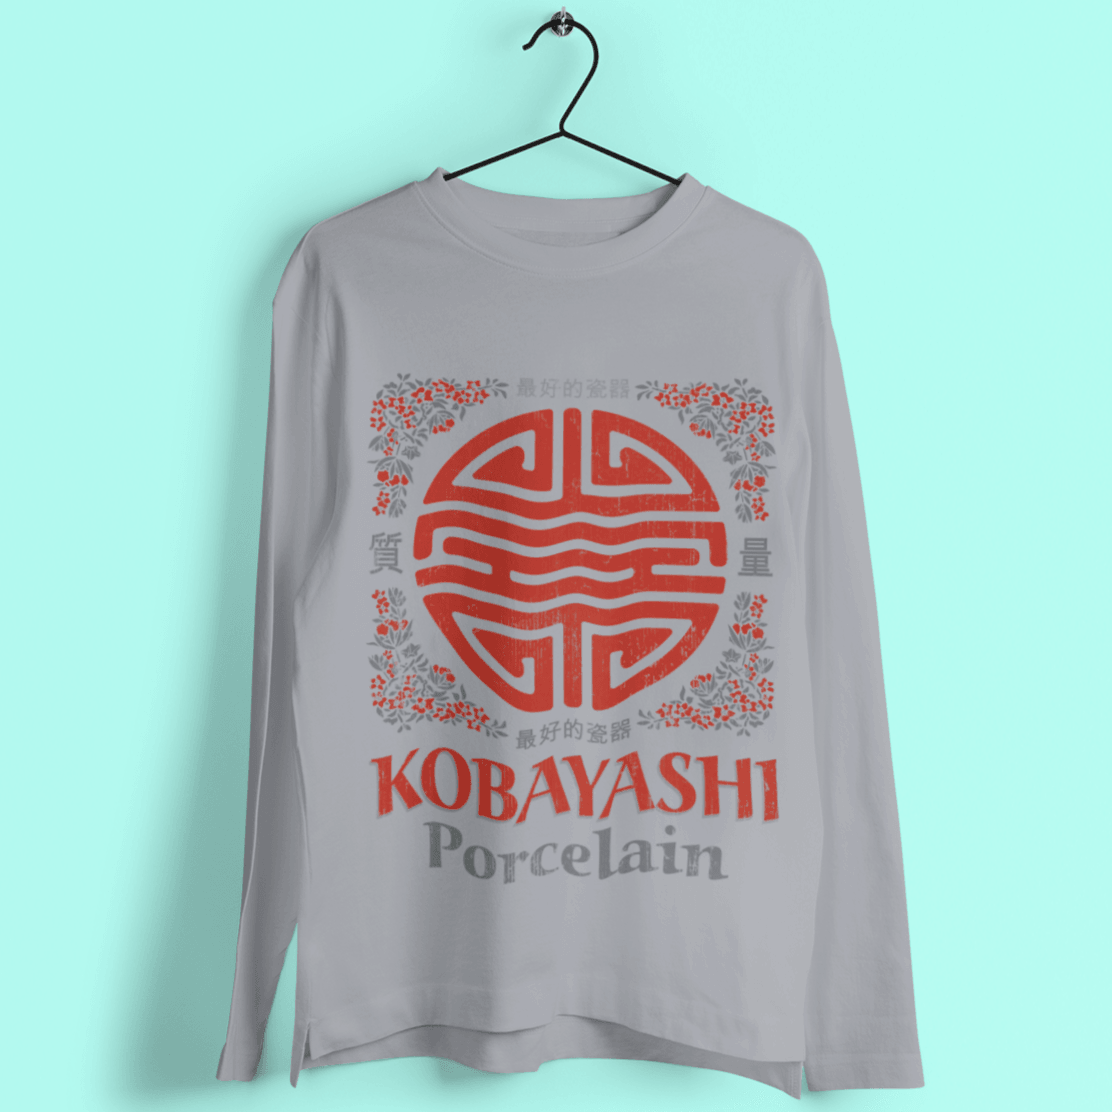 Kobayashi Porcelain Long Sleeve T-Shirt 8Ball